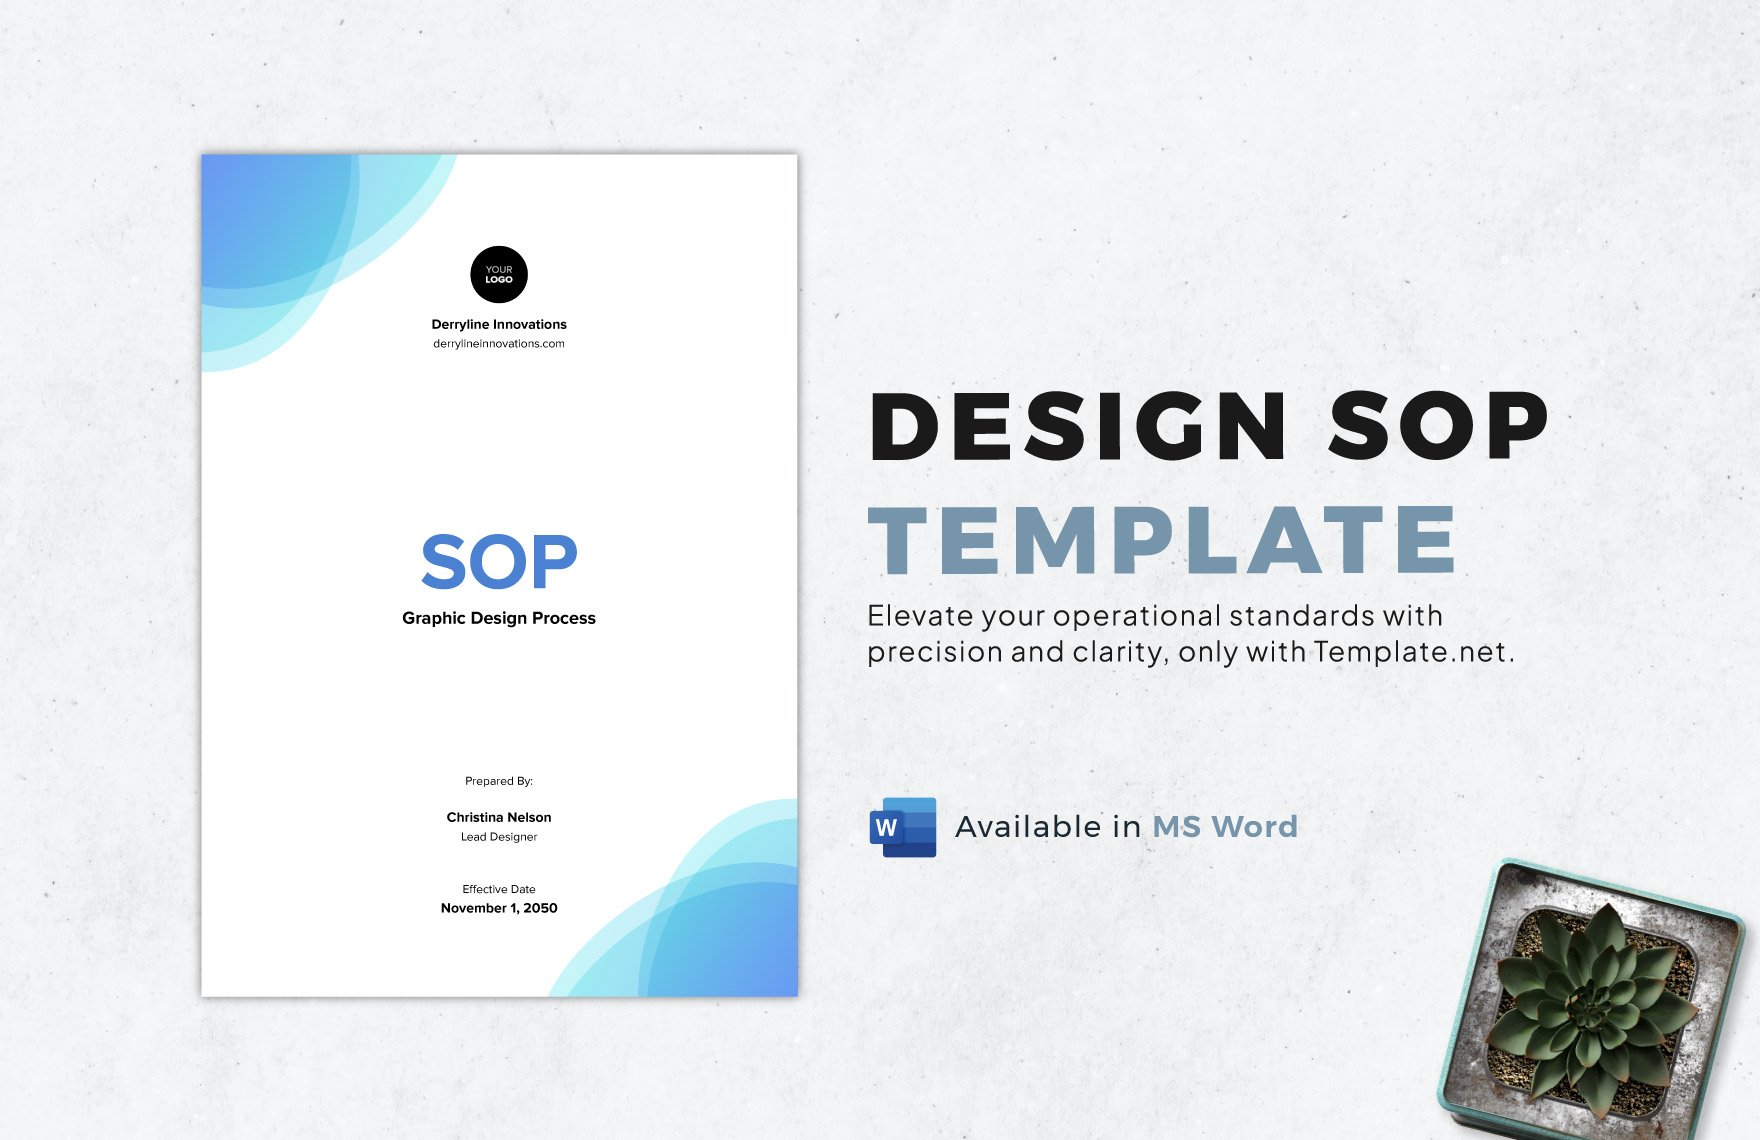 Design SOP Template